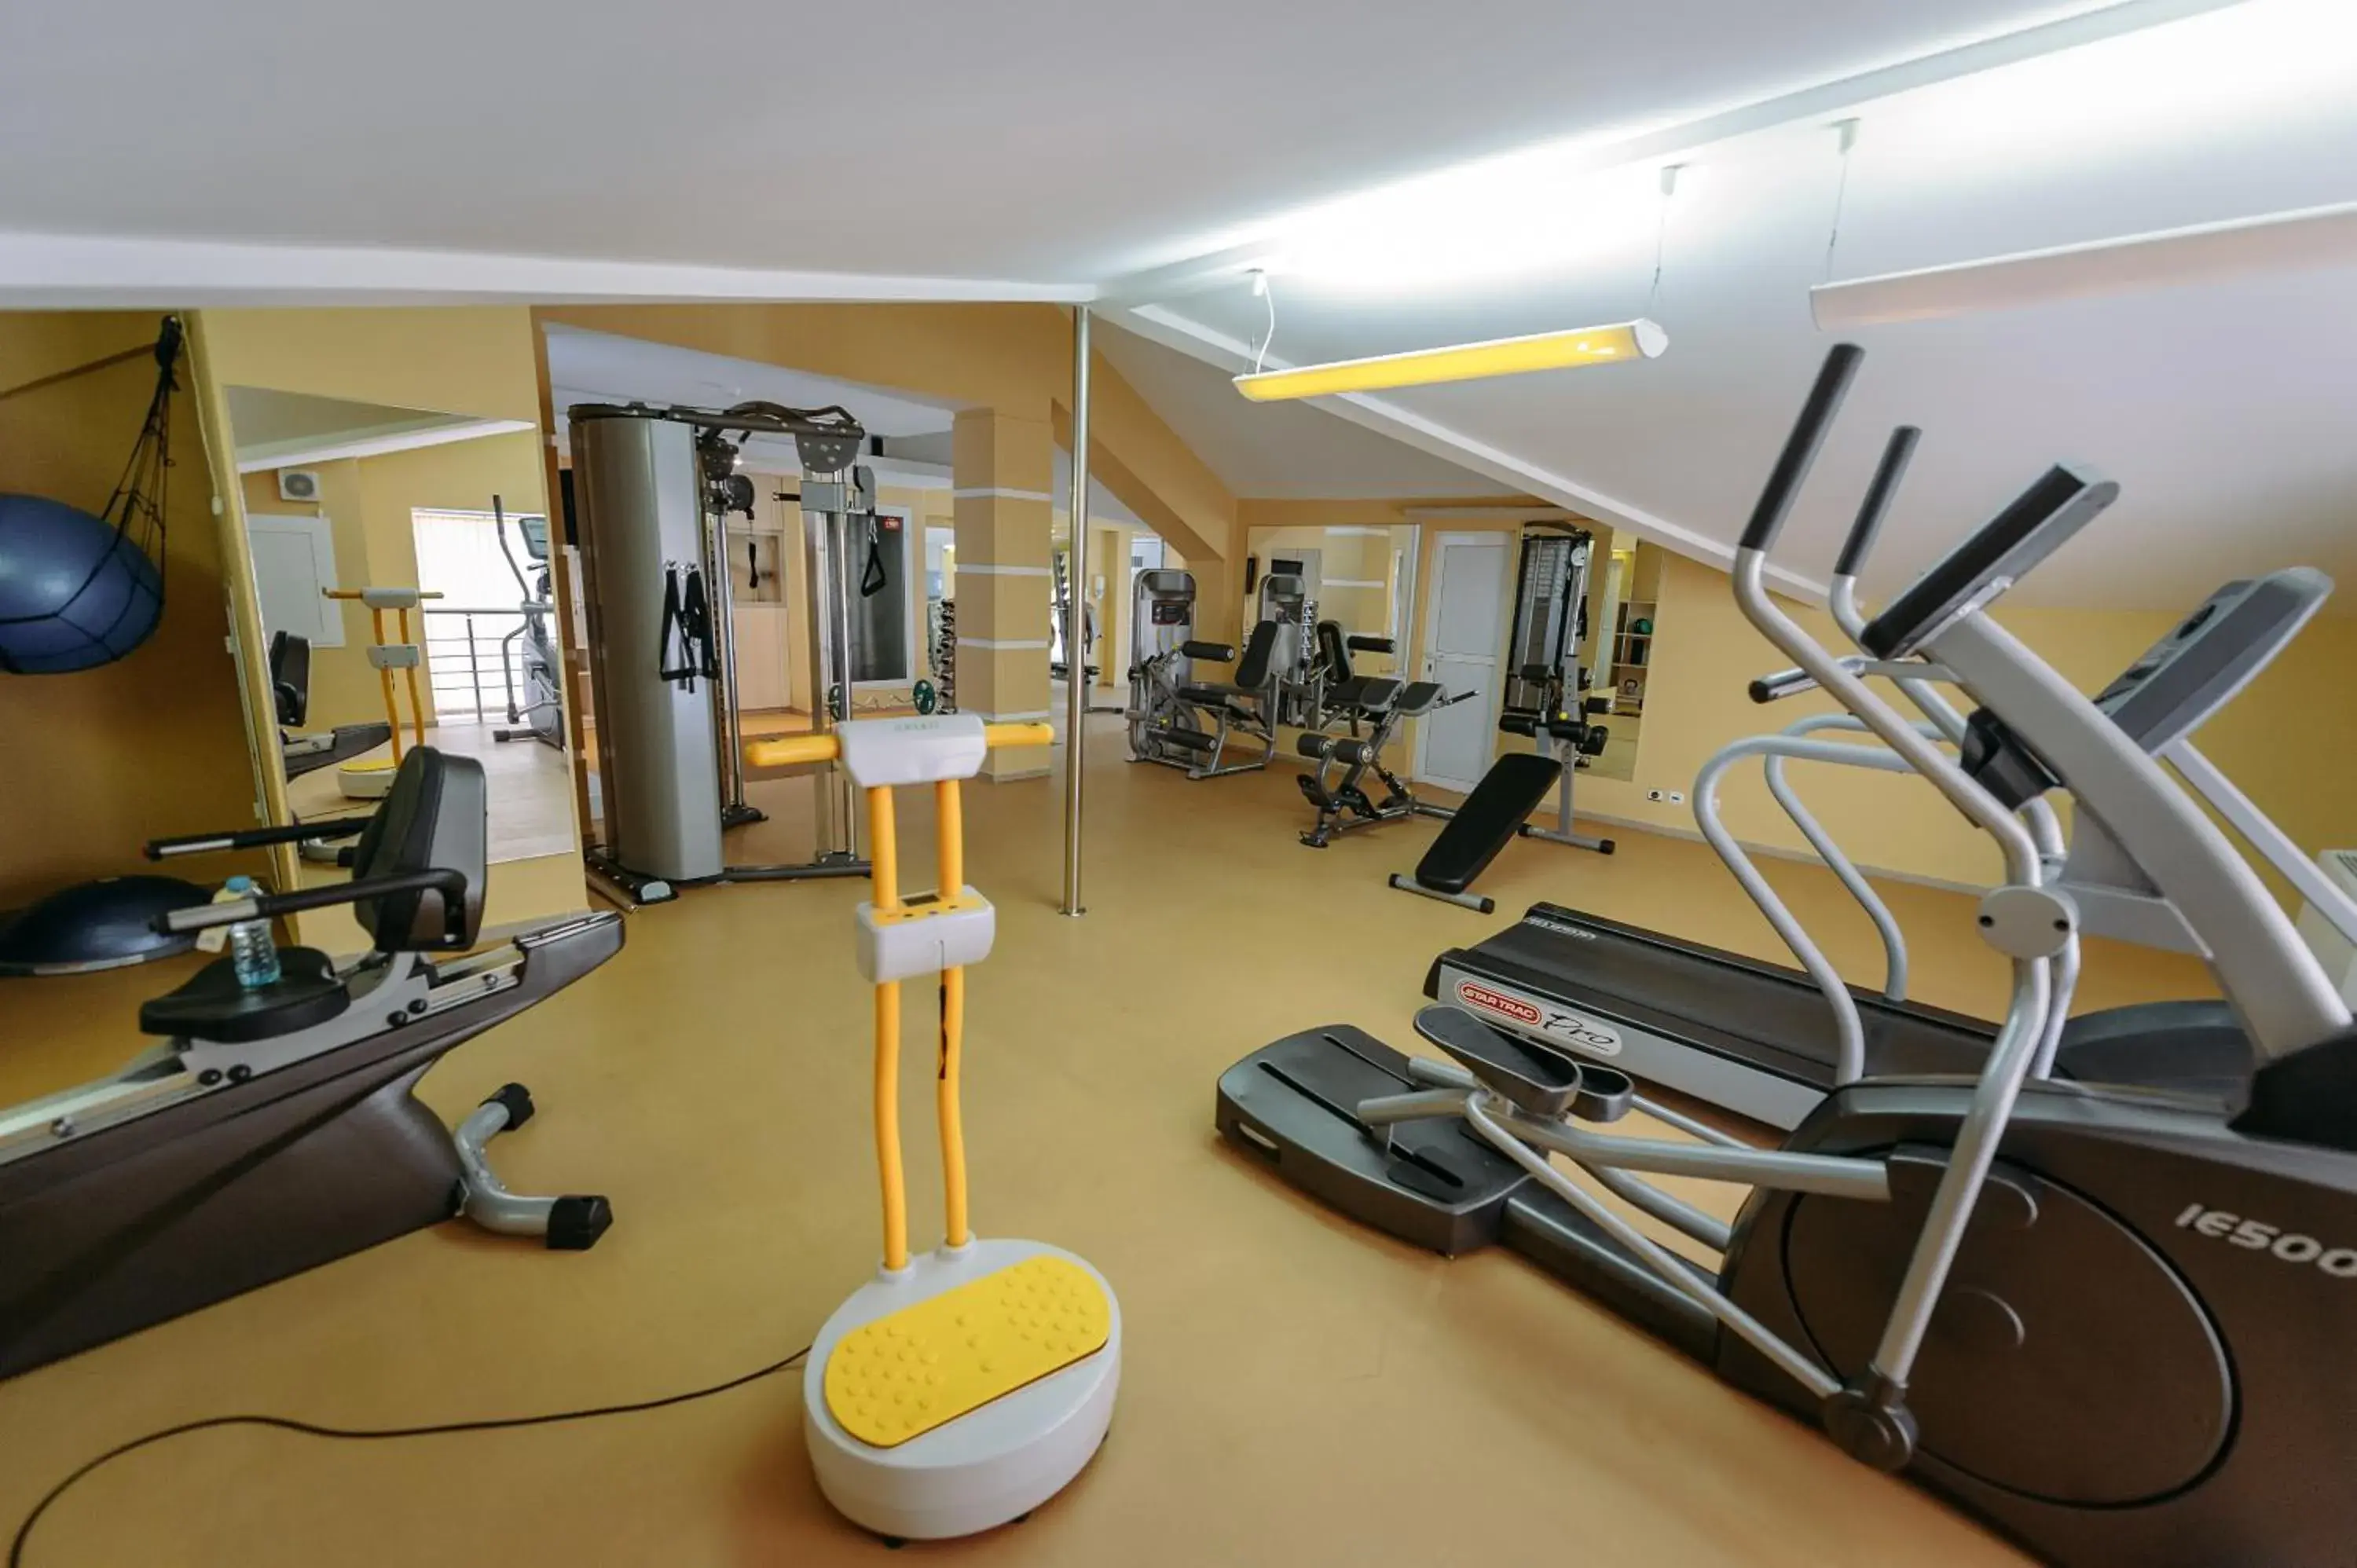 Fitness centre/facilities, Fitness Center/Facilities in Jazz Hotel